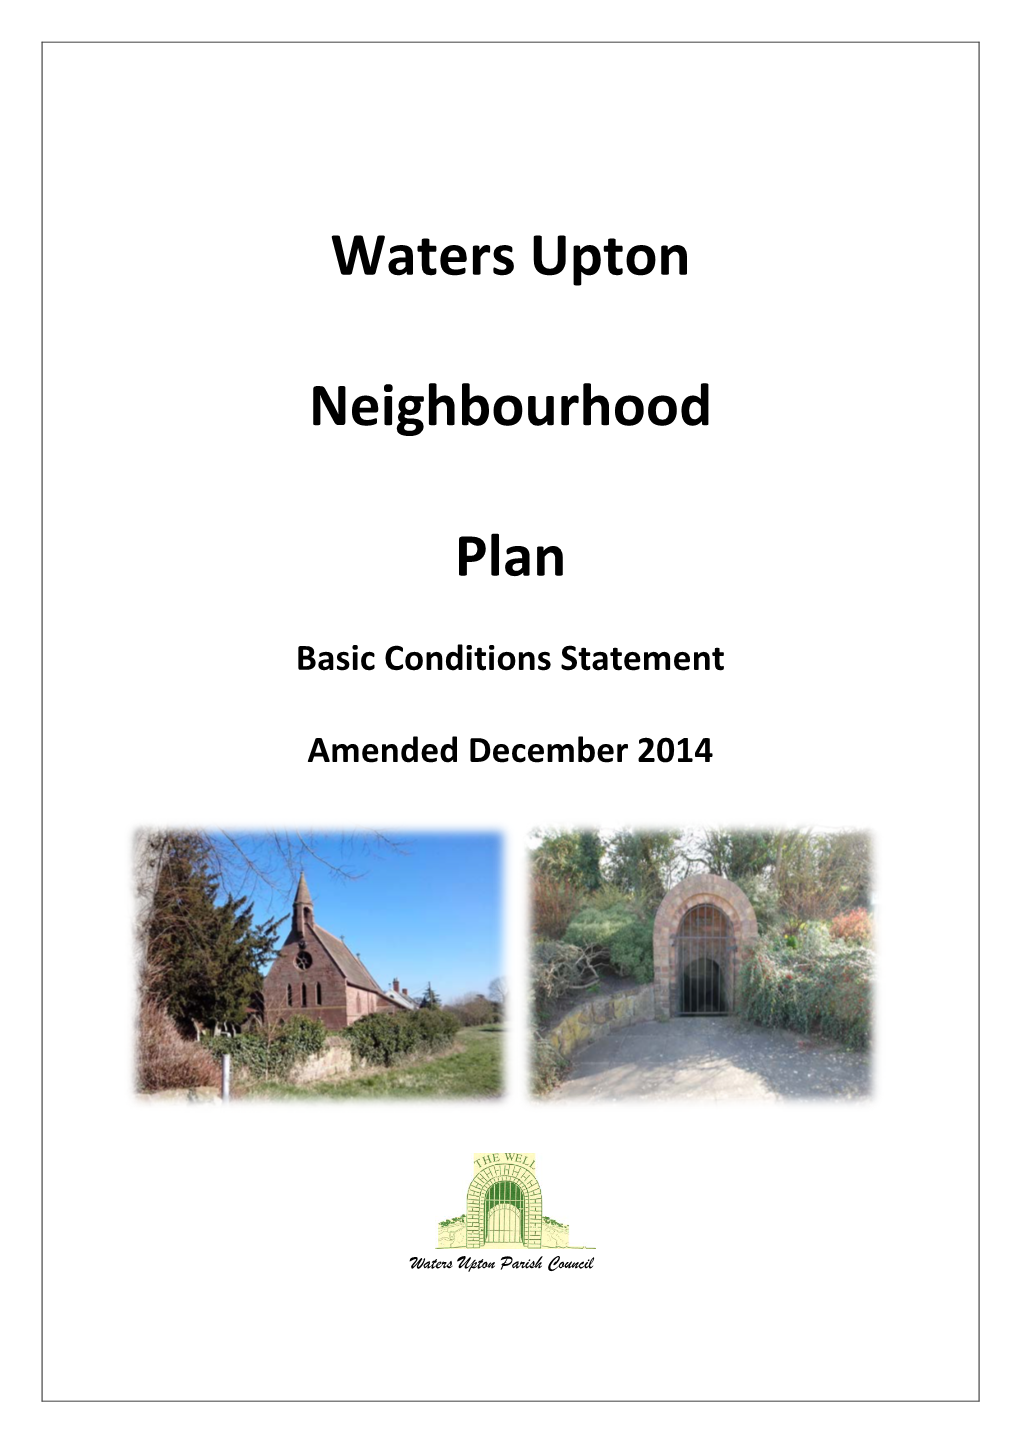 Waters Upton Neighbourhood Plan Basic Conditions Statement June 2014